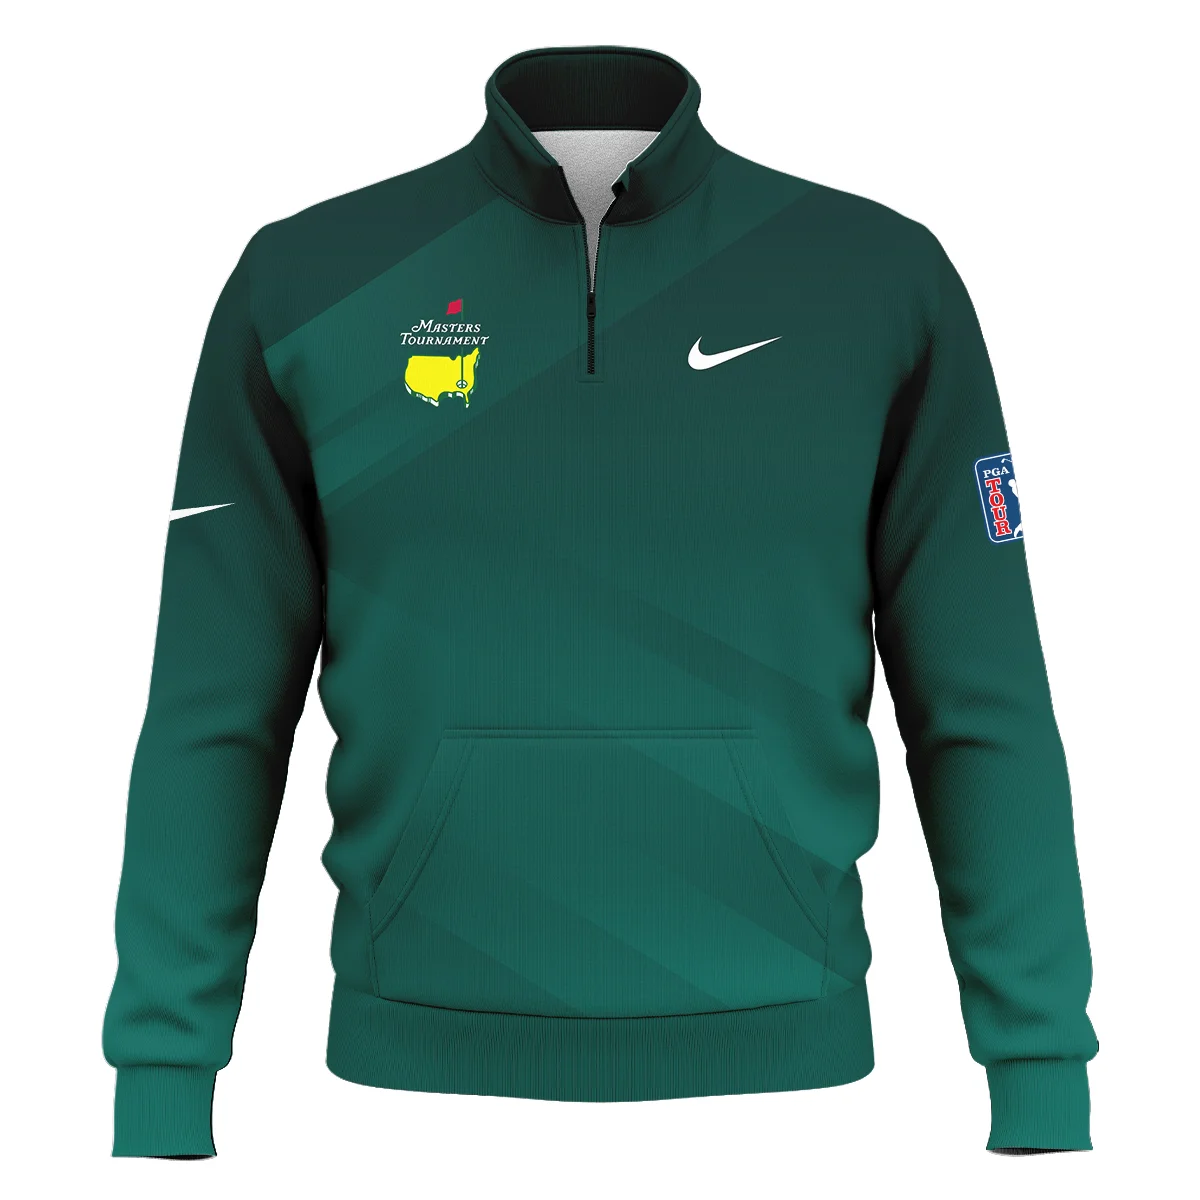 Masters Tournament Dark Green Gradient Golf Sport Nike Zipper Polo Shirt Style Classic Zipper Polo Shirt For Men